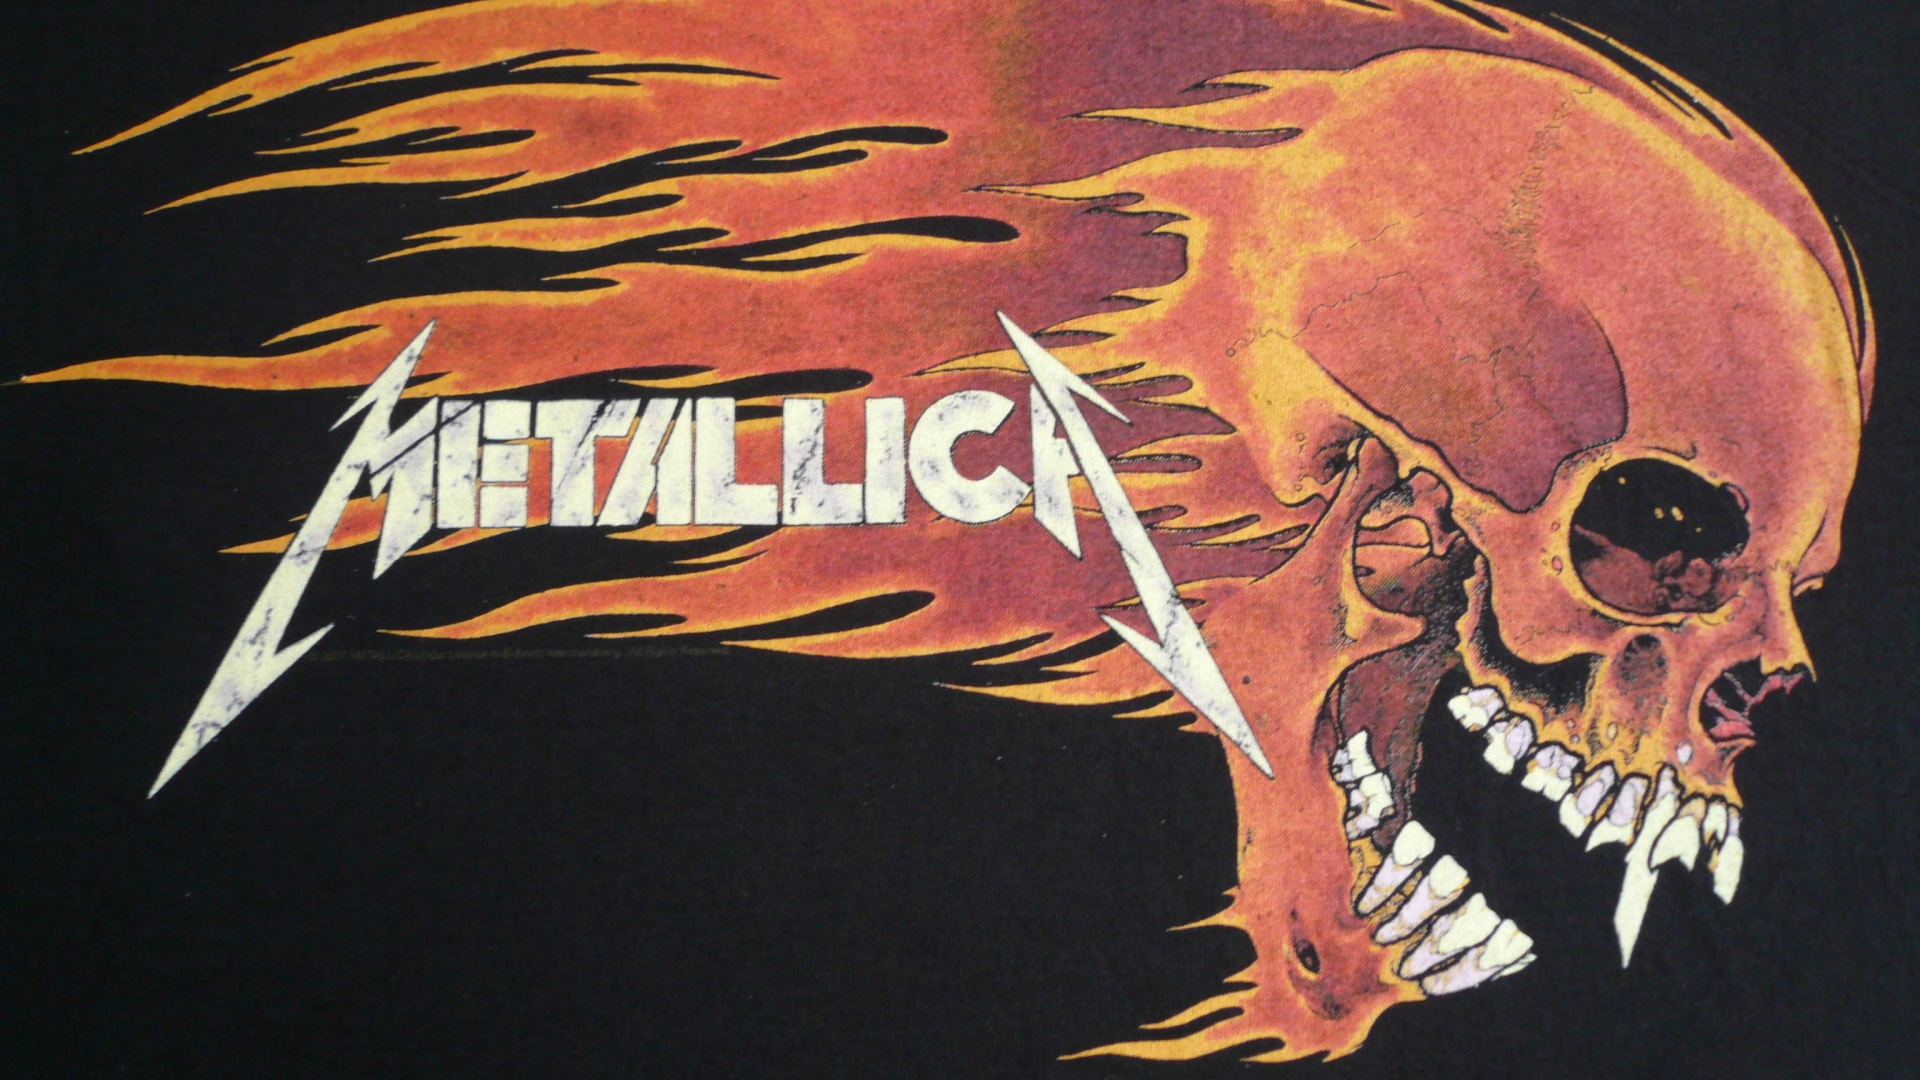 Metallica, Shirt, Schwermetall, Schädel, Knochen. Wallpaper in 1920x1080 Resolution